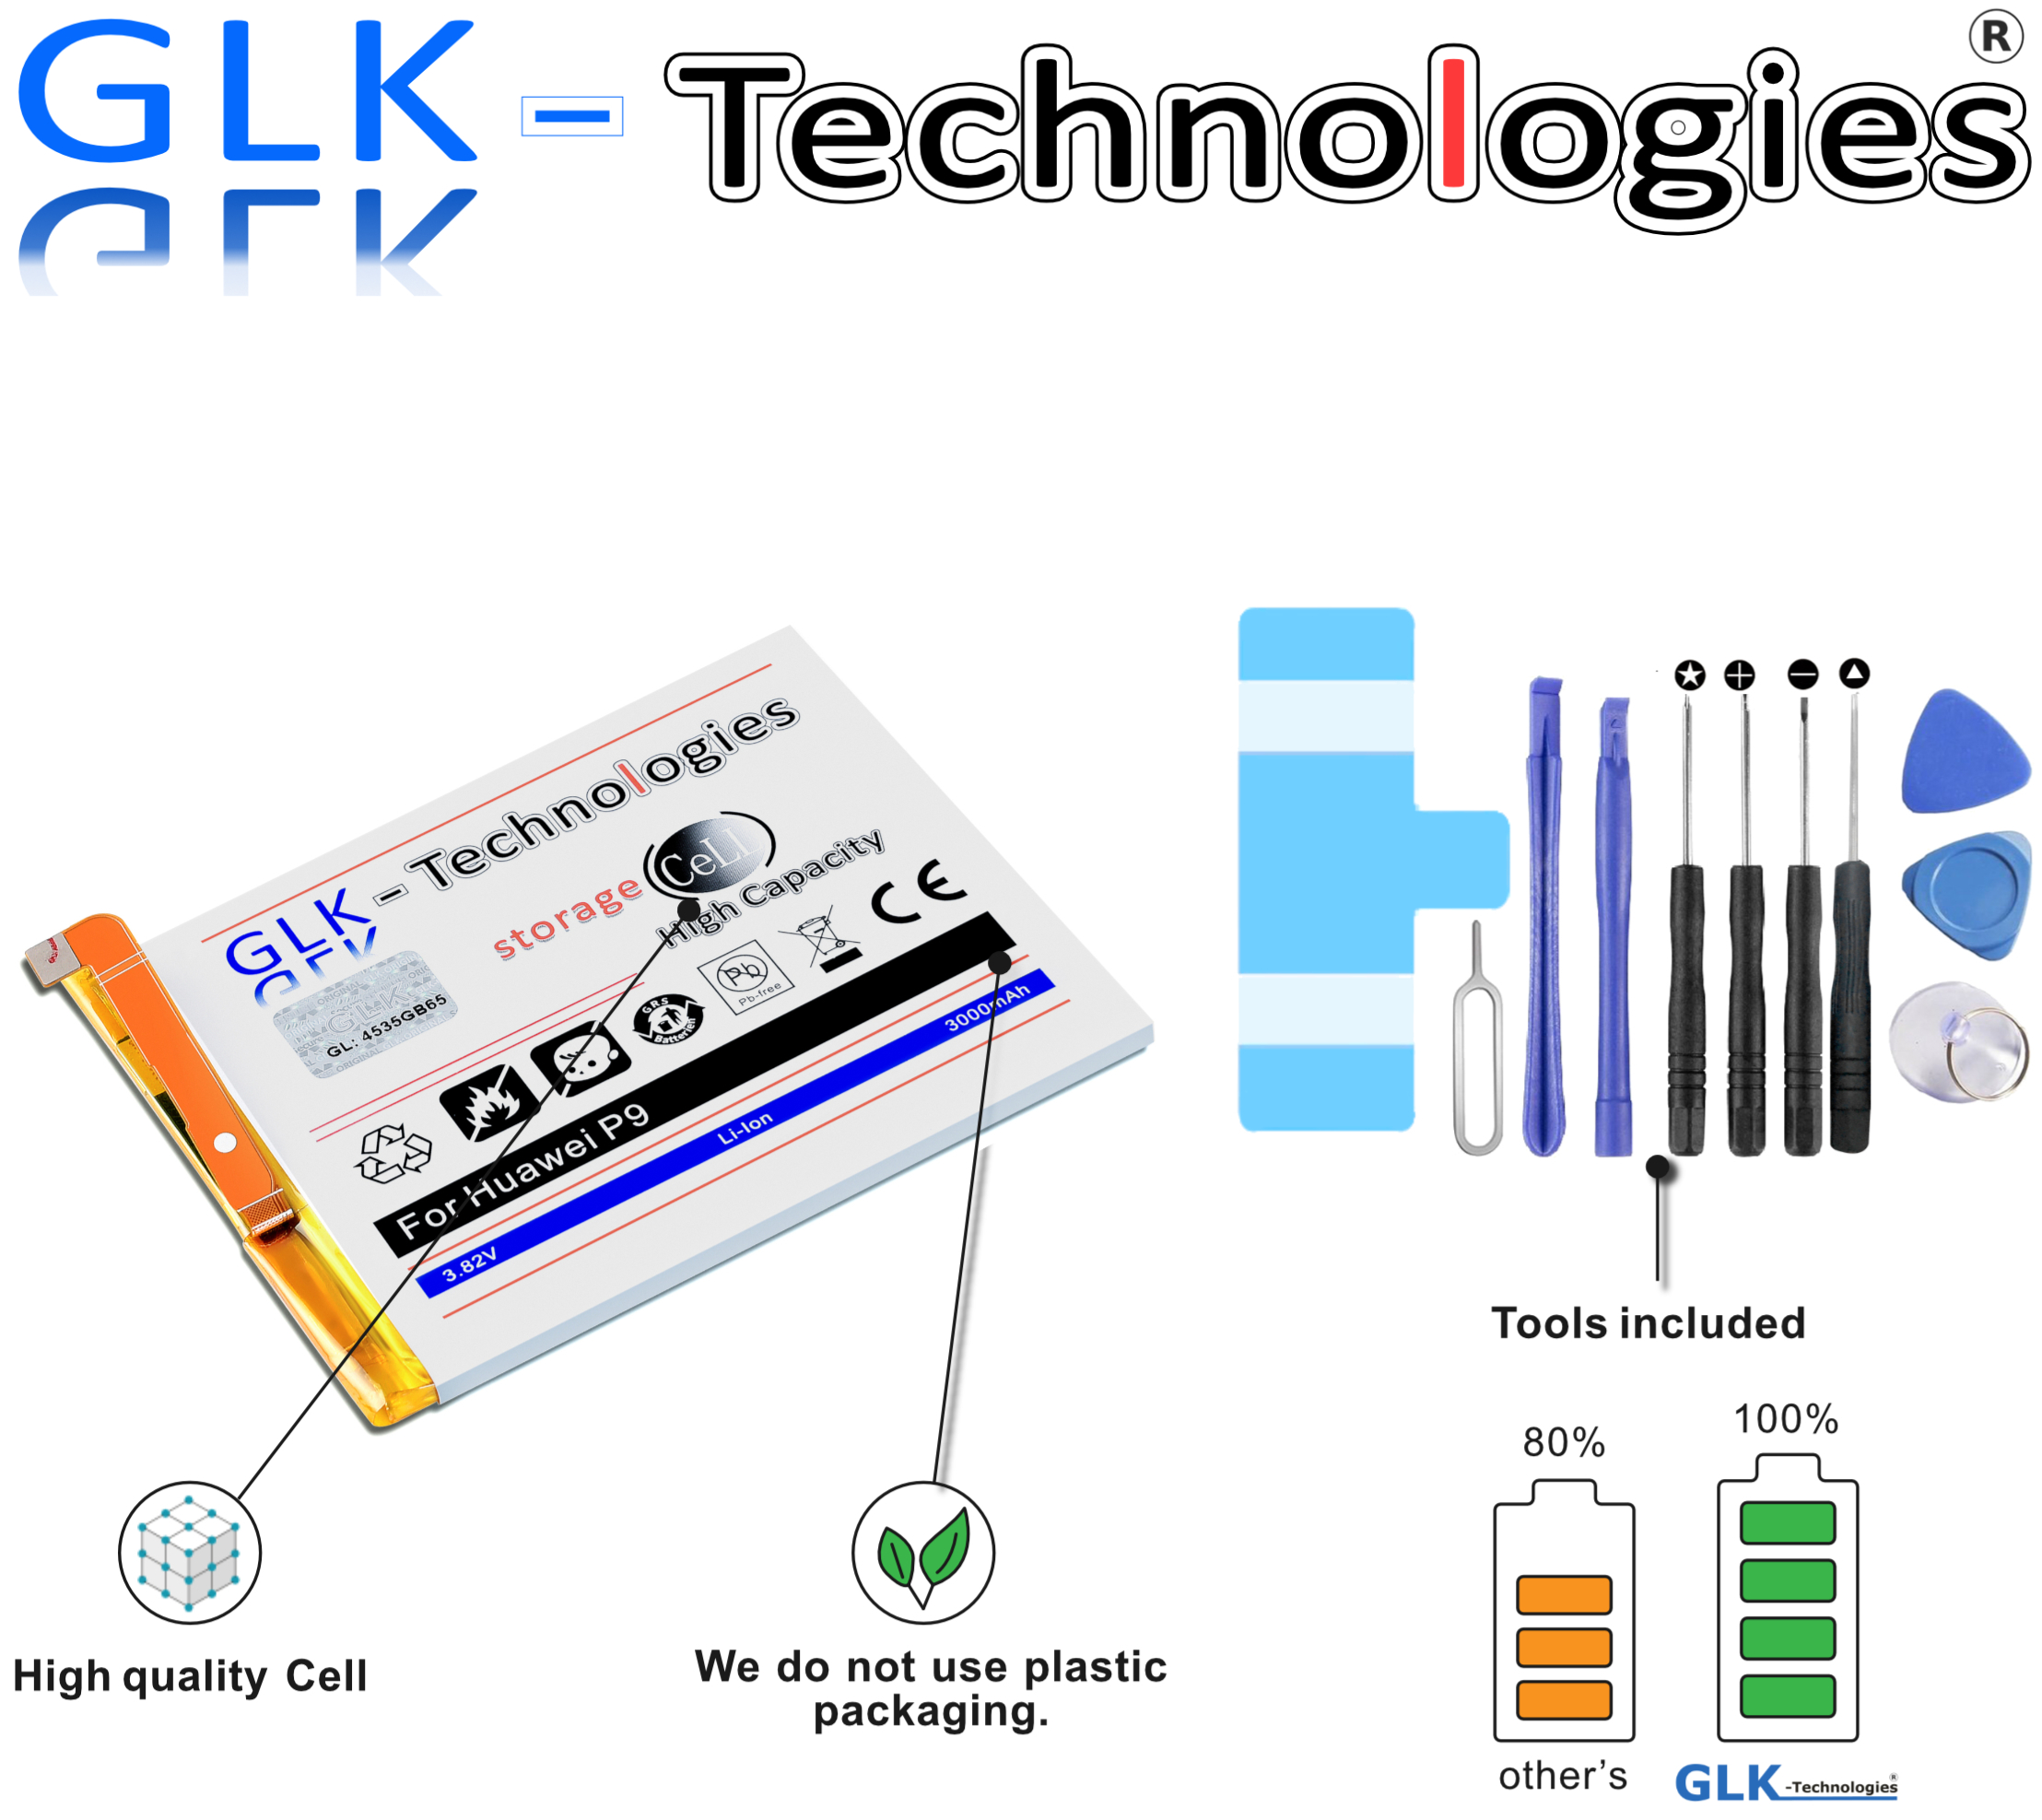 GLK-TECHNOLOGIES High Power Ersatz Werkzeug Kit Set Akku Li-Ion HB366481ECW inkl. P9 Huawei für Ersatz Smartphone Akku Battery